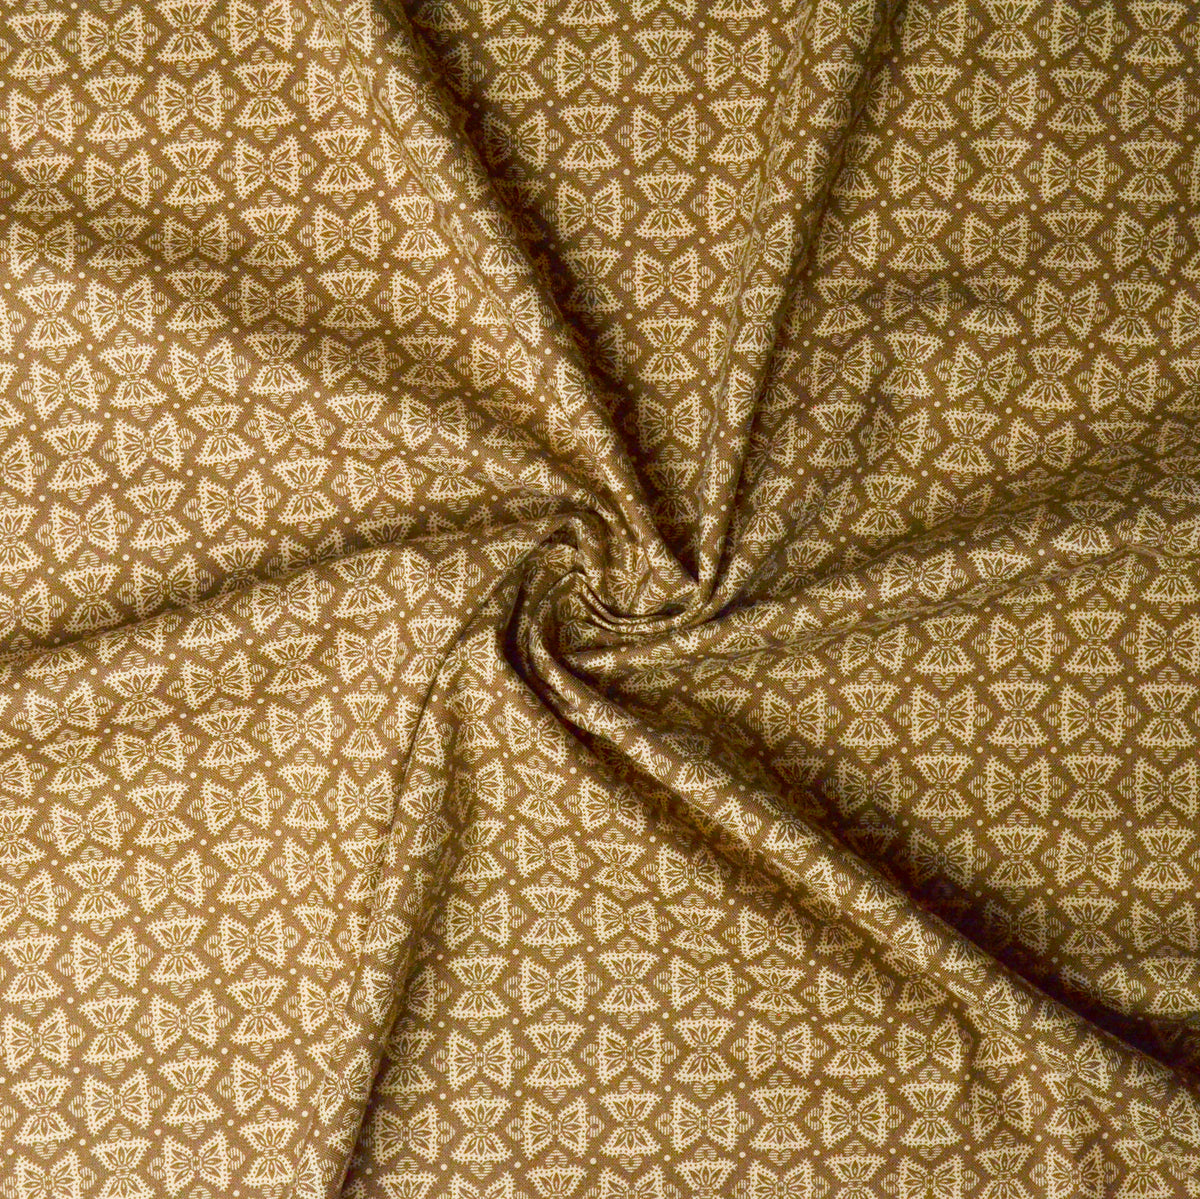  QiMicody Quilting Fabric, 44pcs 100% Cotton 9.8” x 9.8